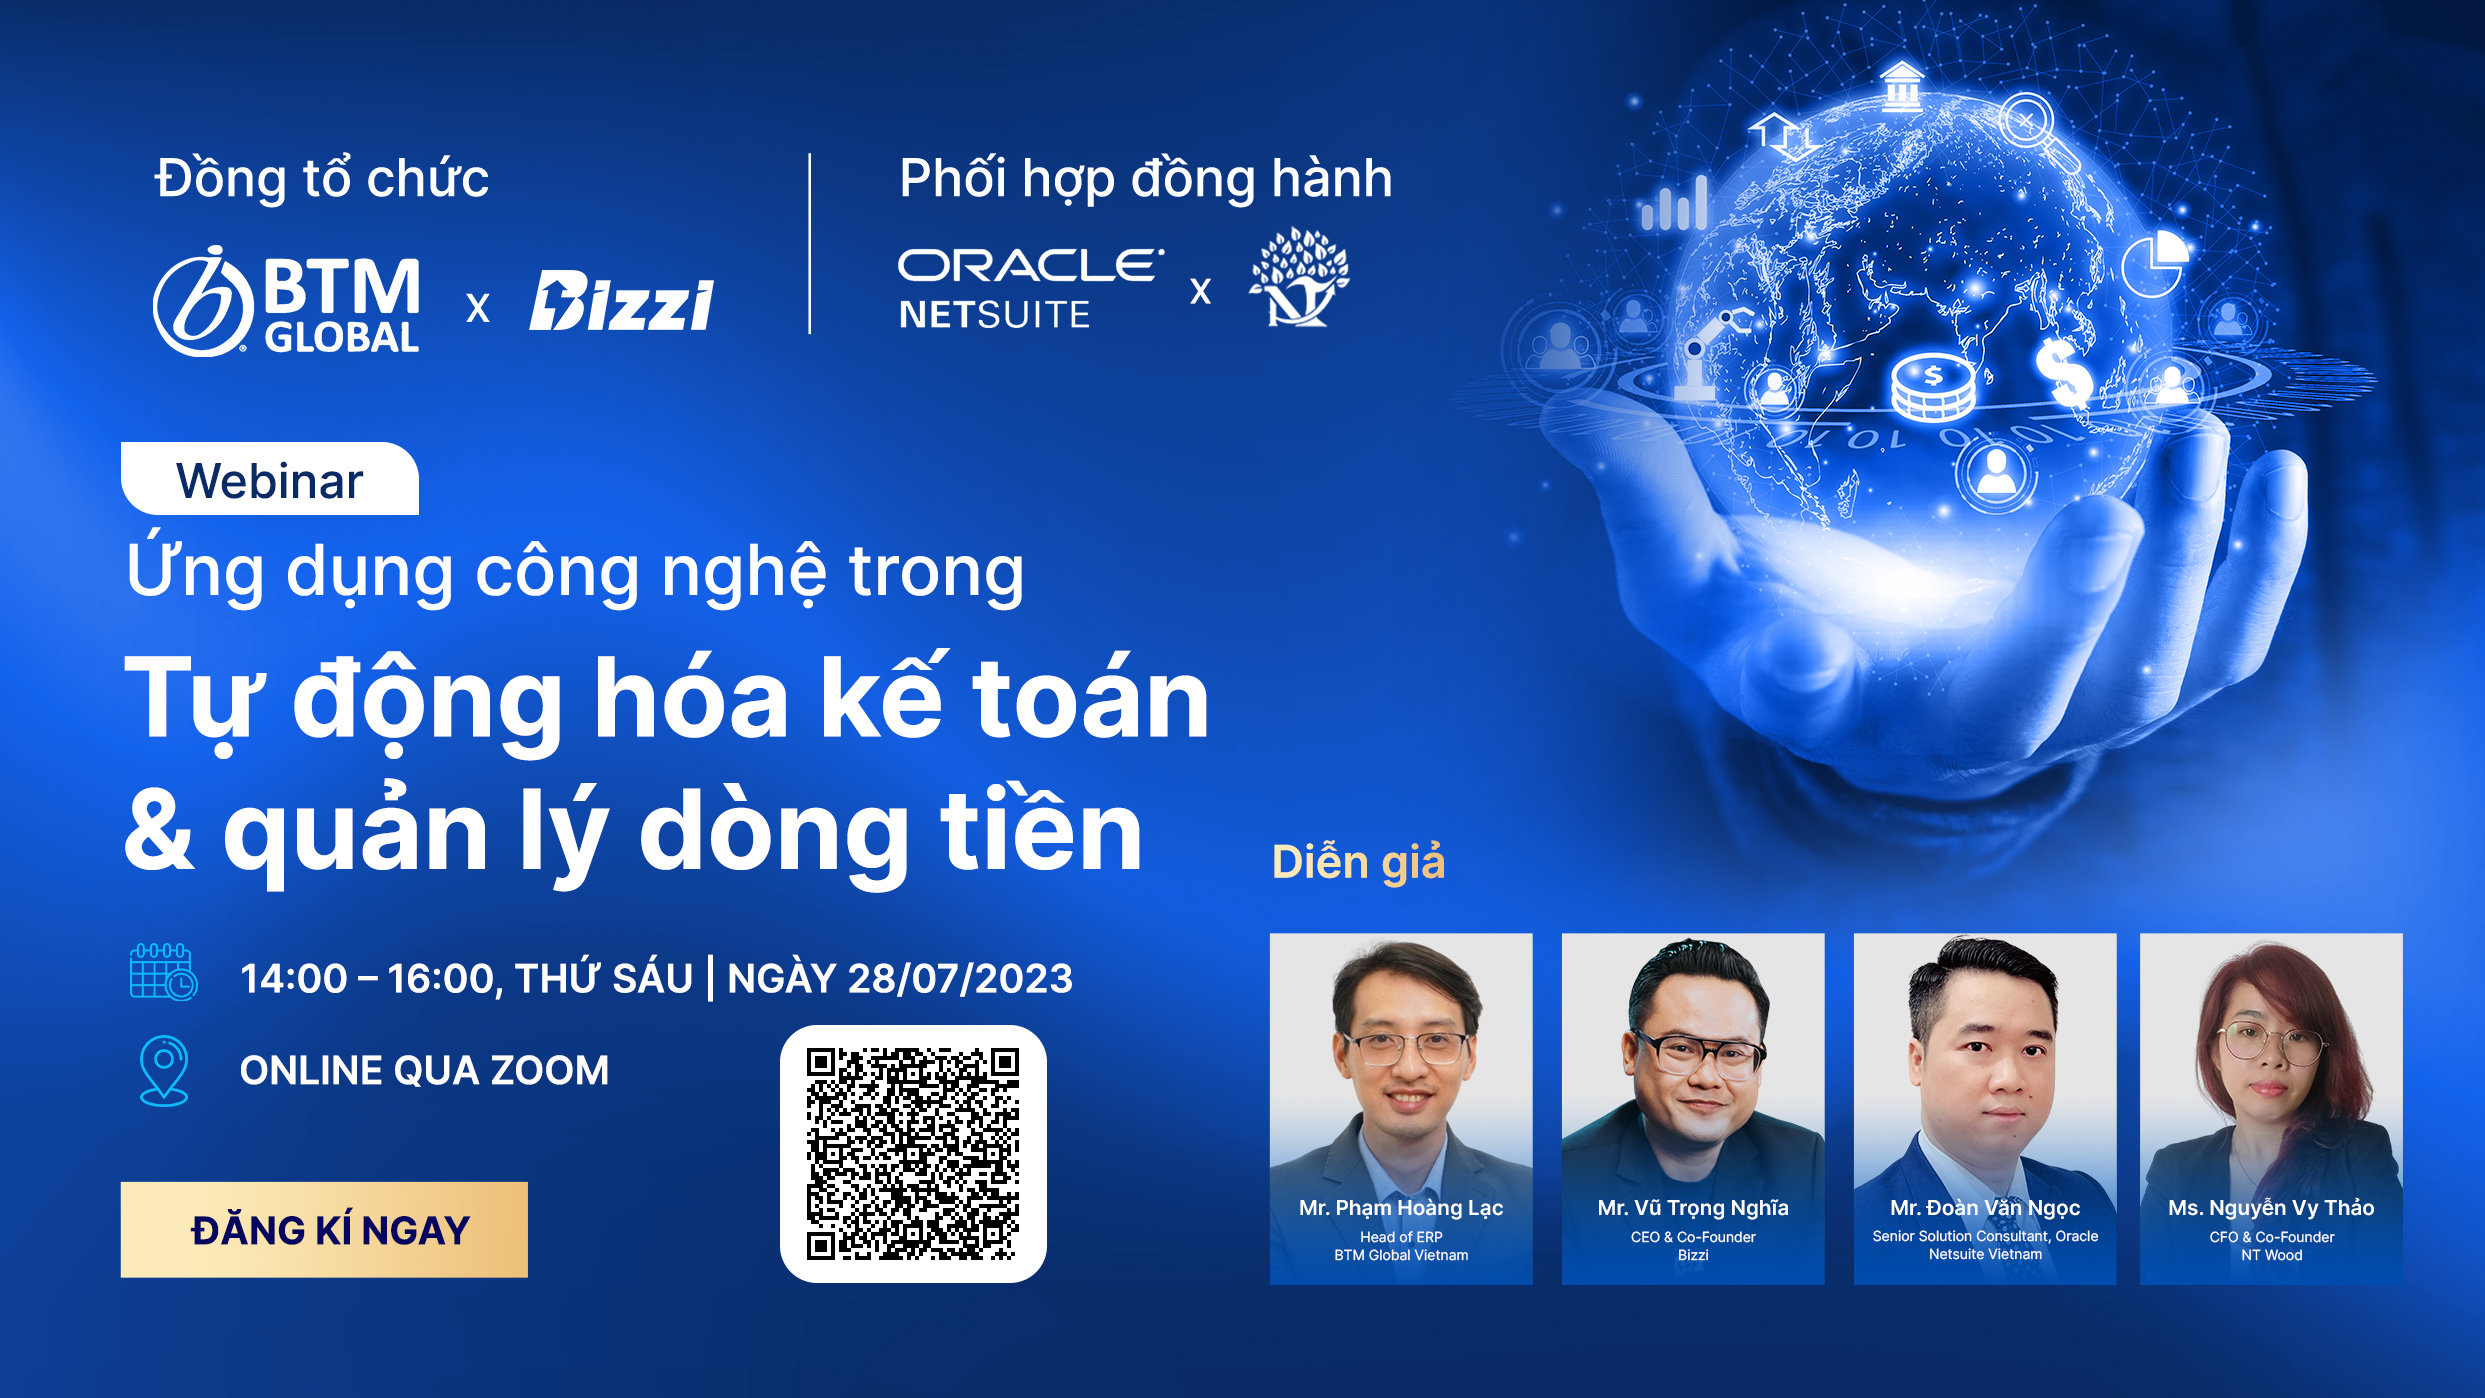 Banner - BTM Global x Bizzi x Oracle Vietnam